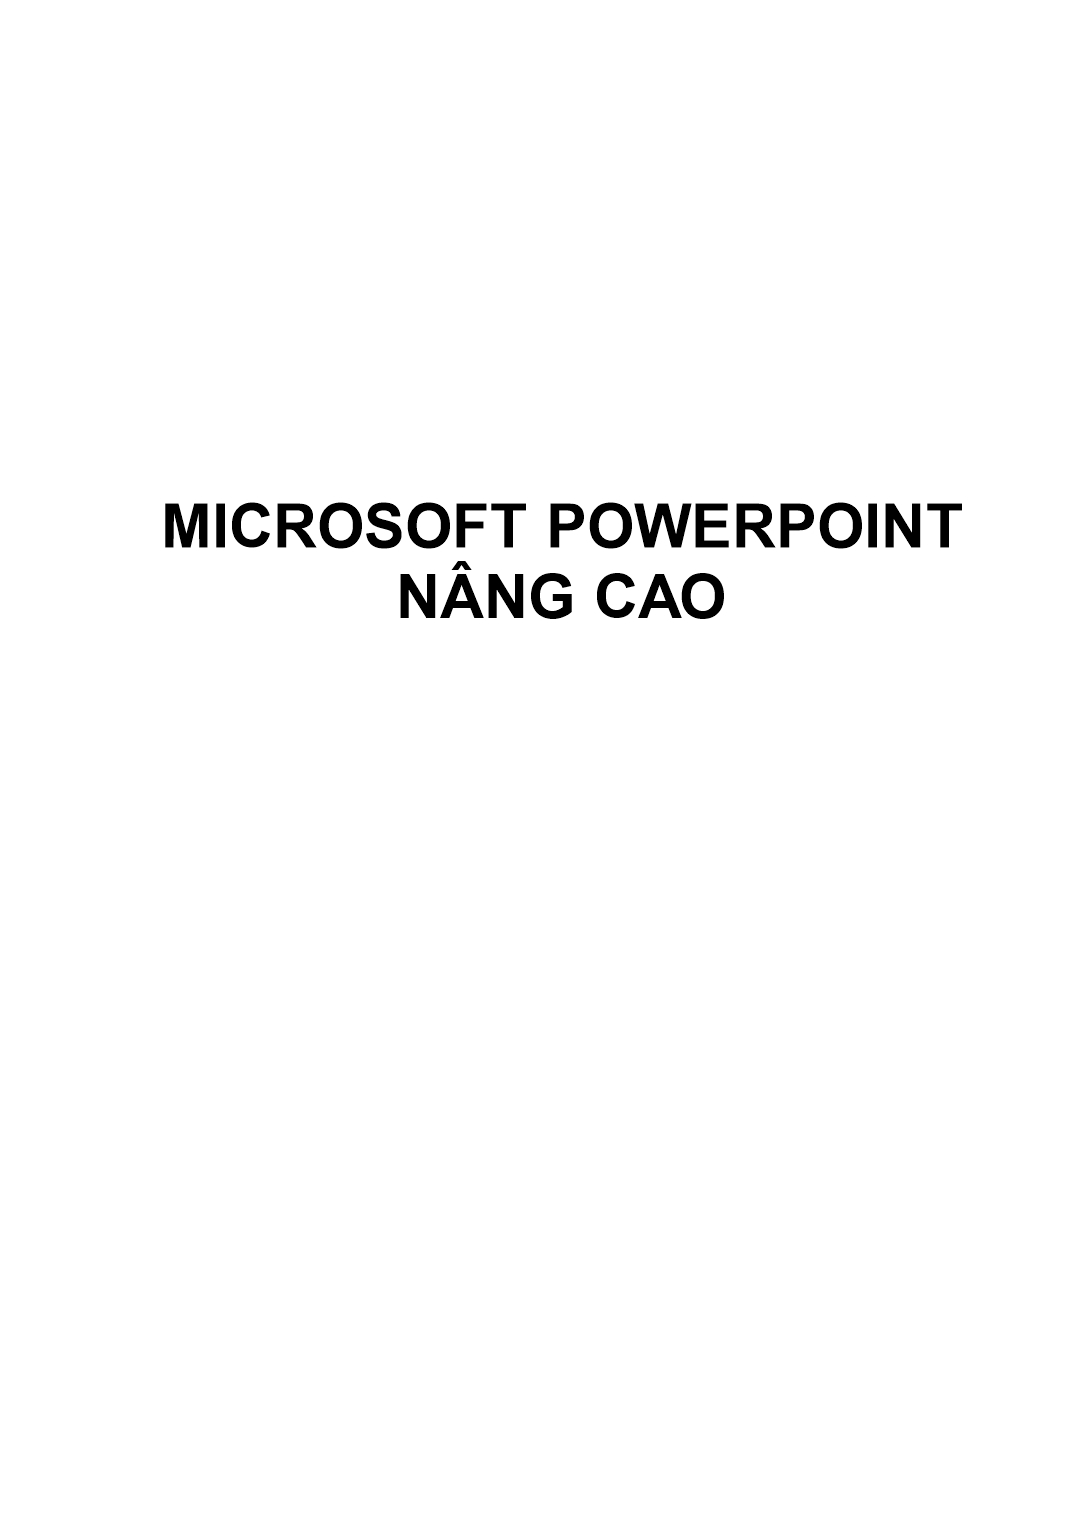 Microsoft Powerpoint nâng cao trang 1